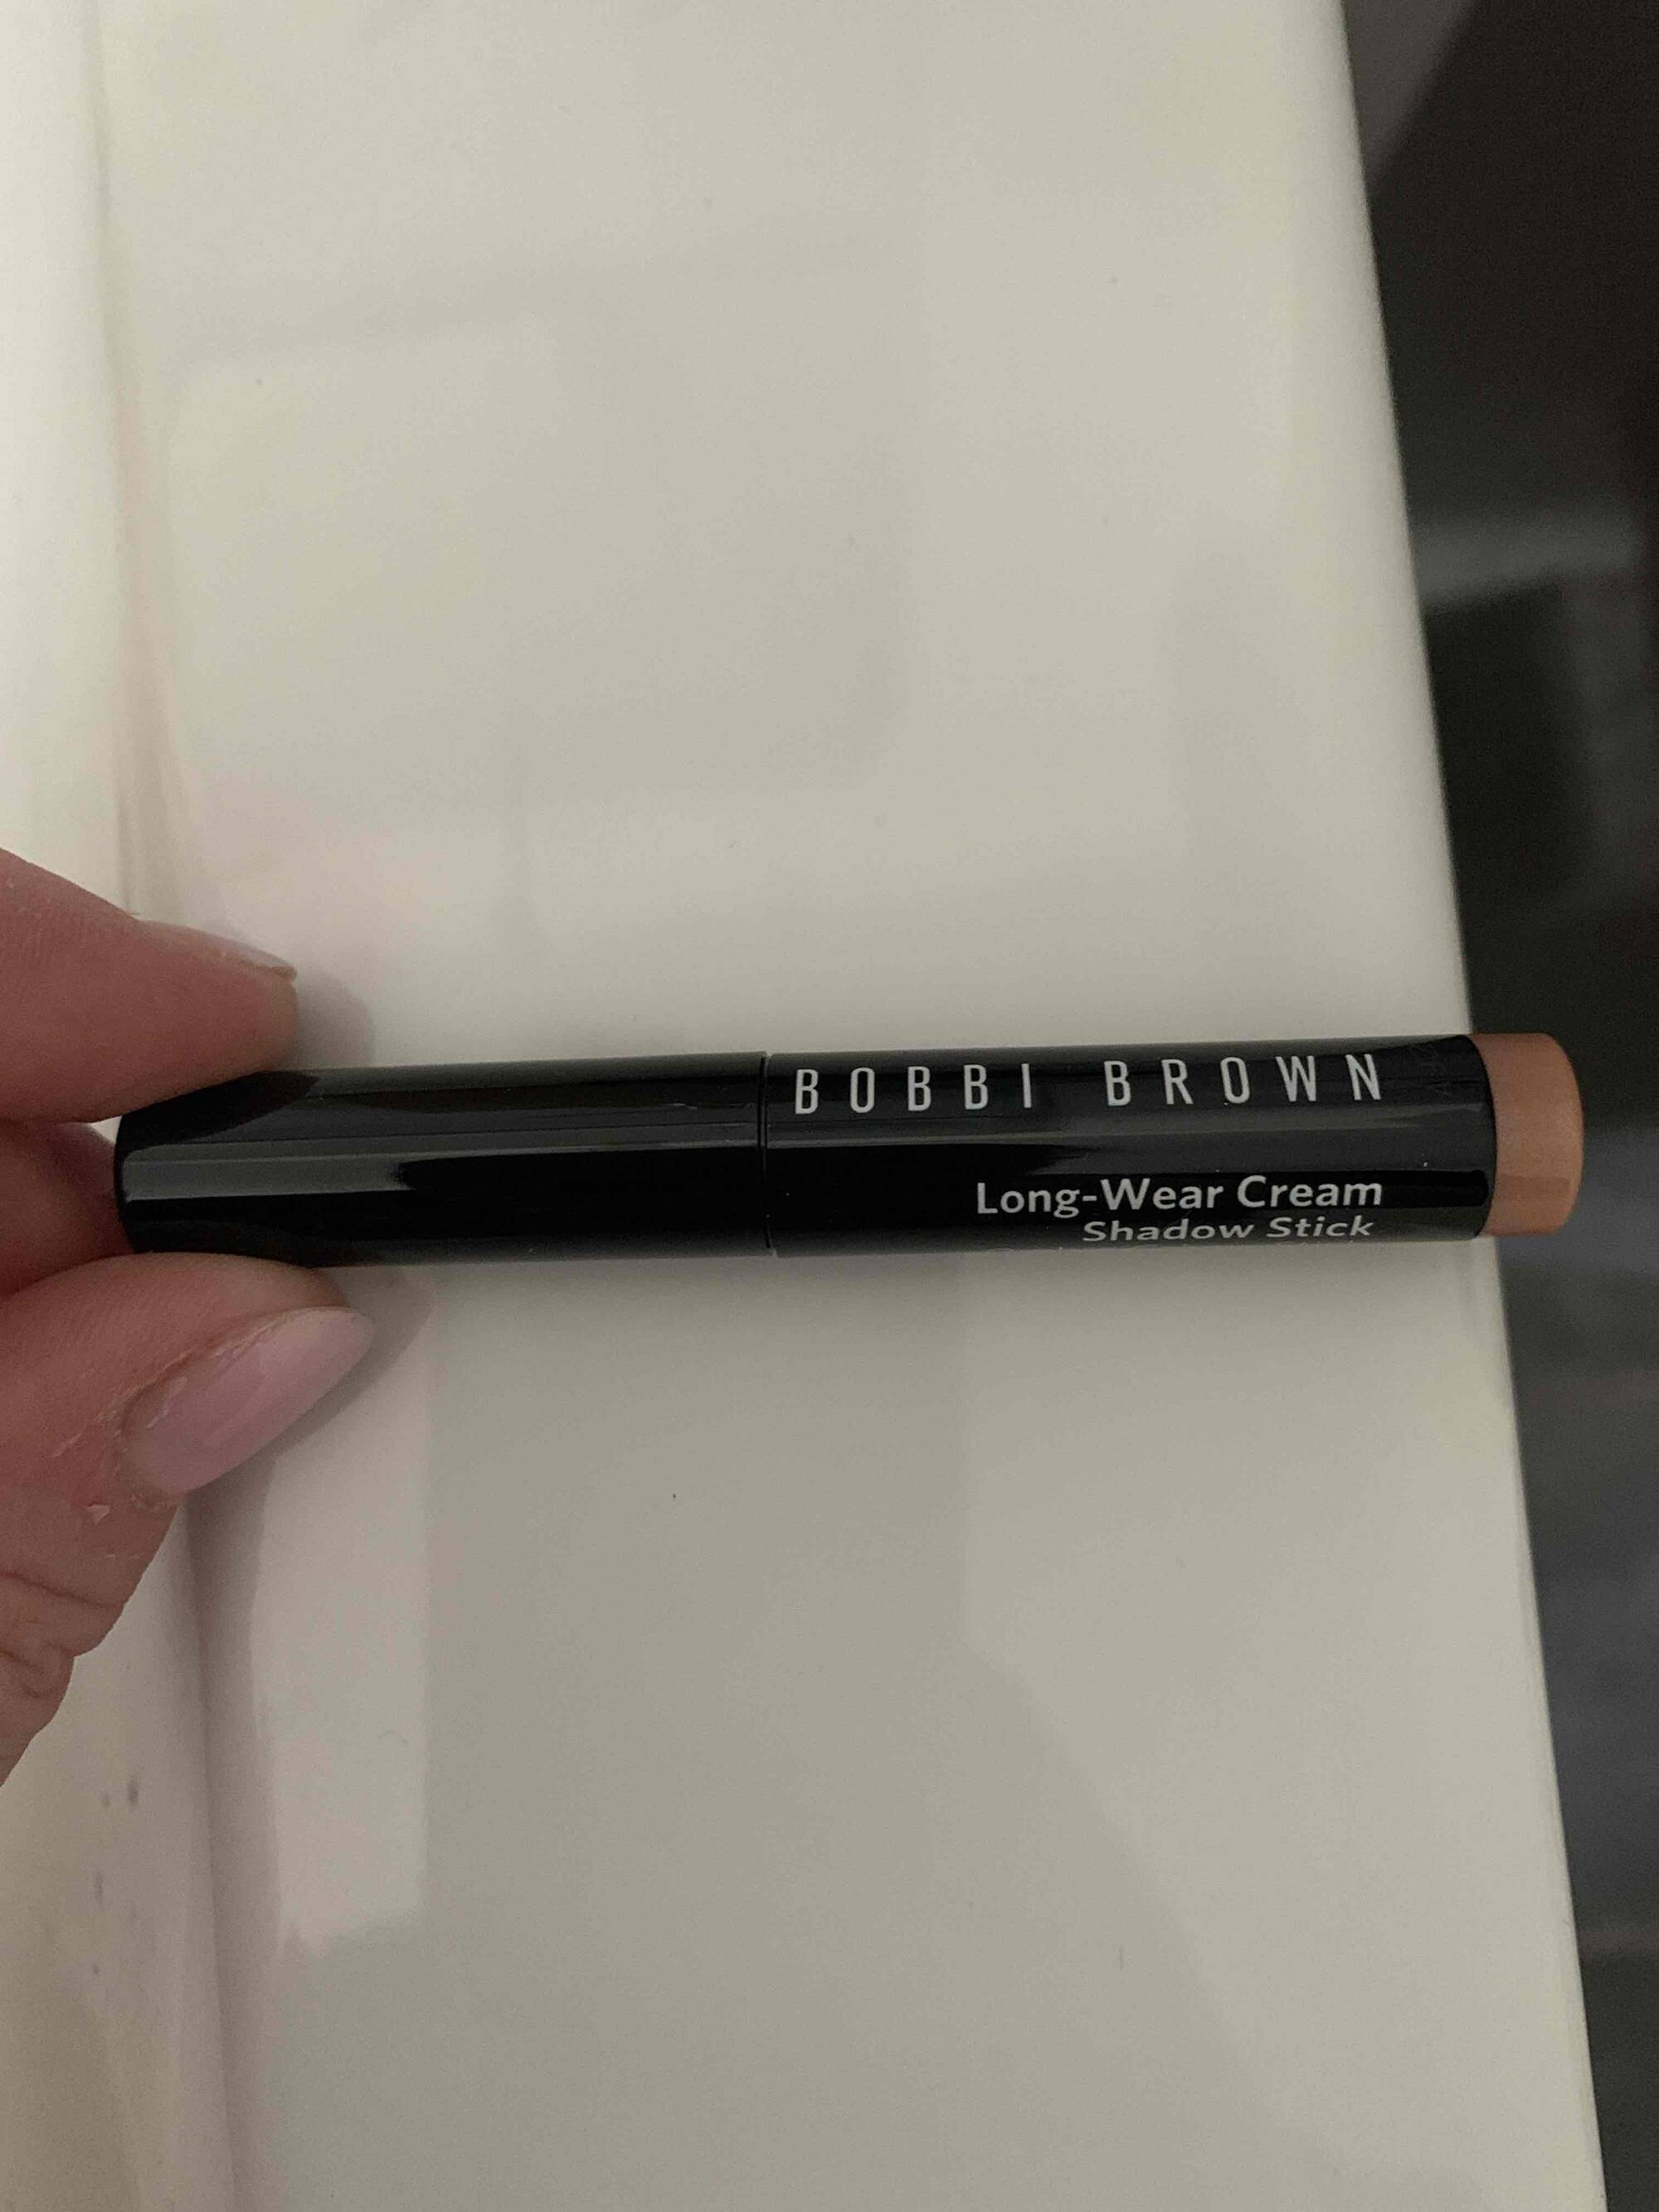 BOBBI BROWN - Long wear cream - Shadow stick